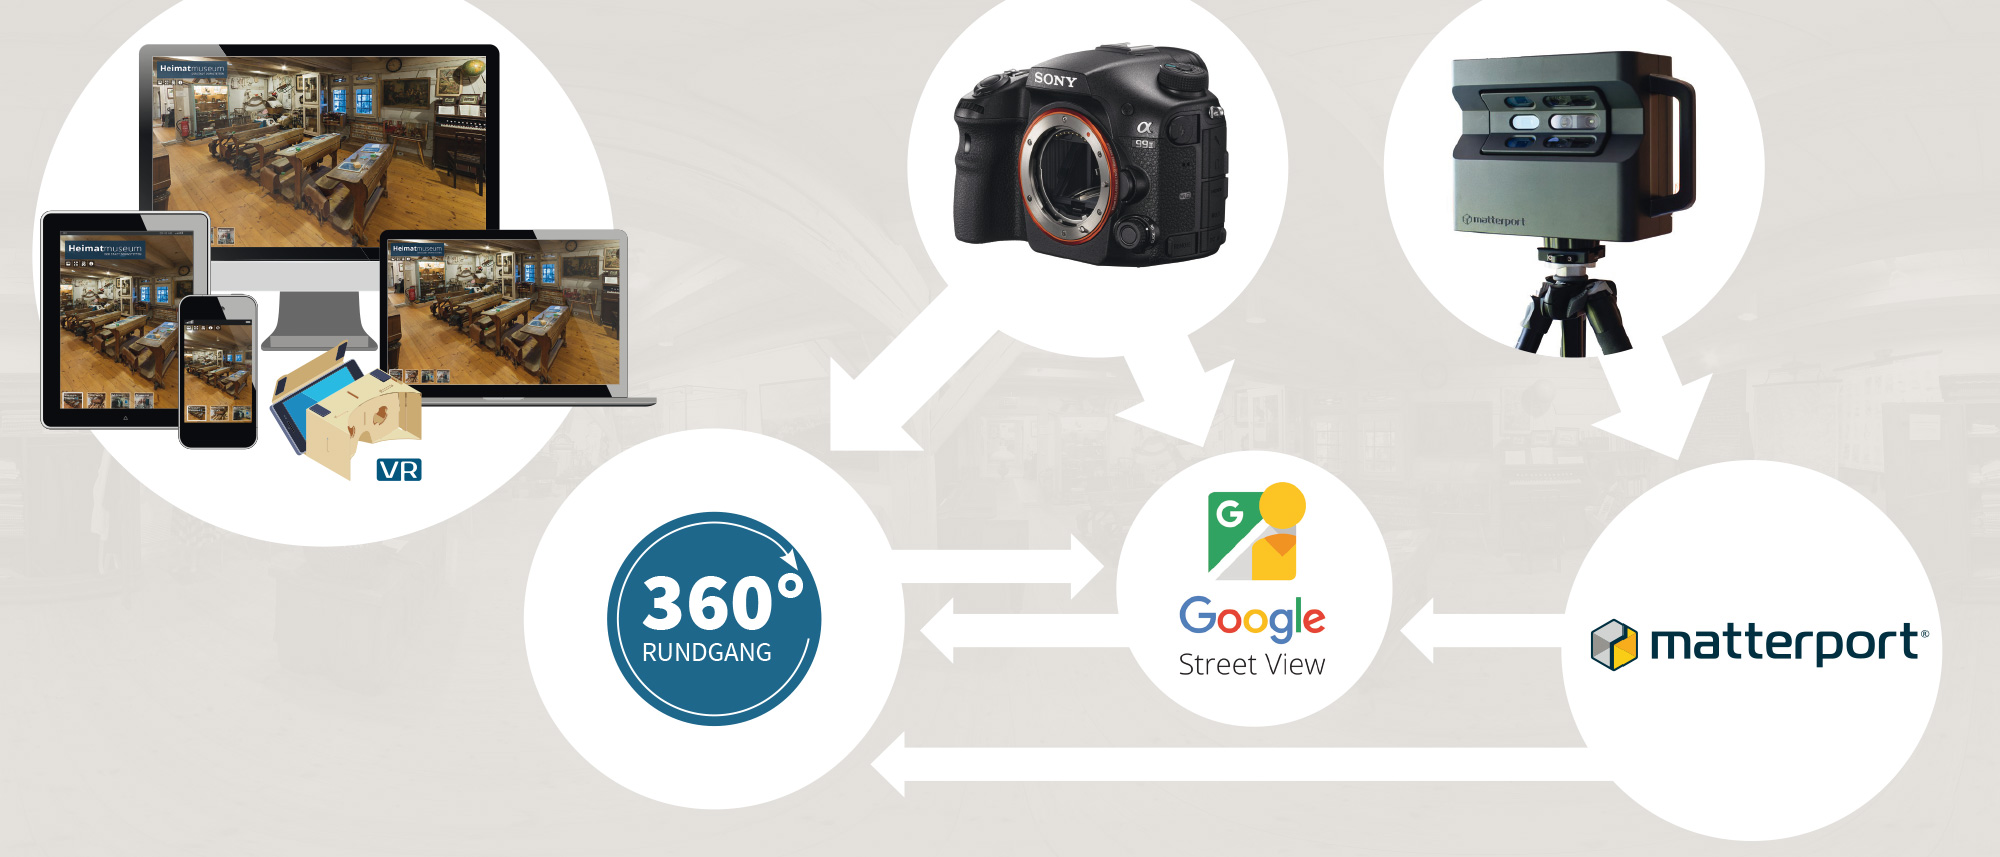 Vergleich 360 Grad Rundgang, Google Street View Trusted, matterport